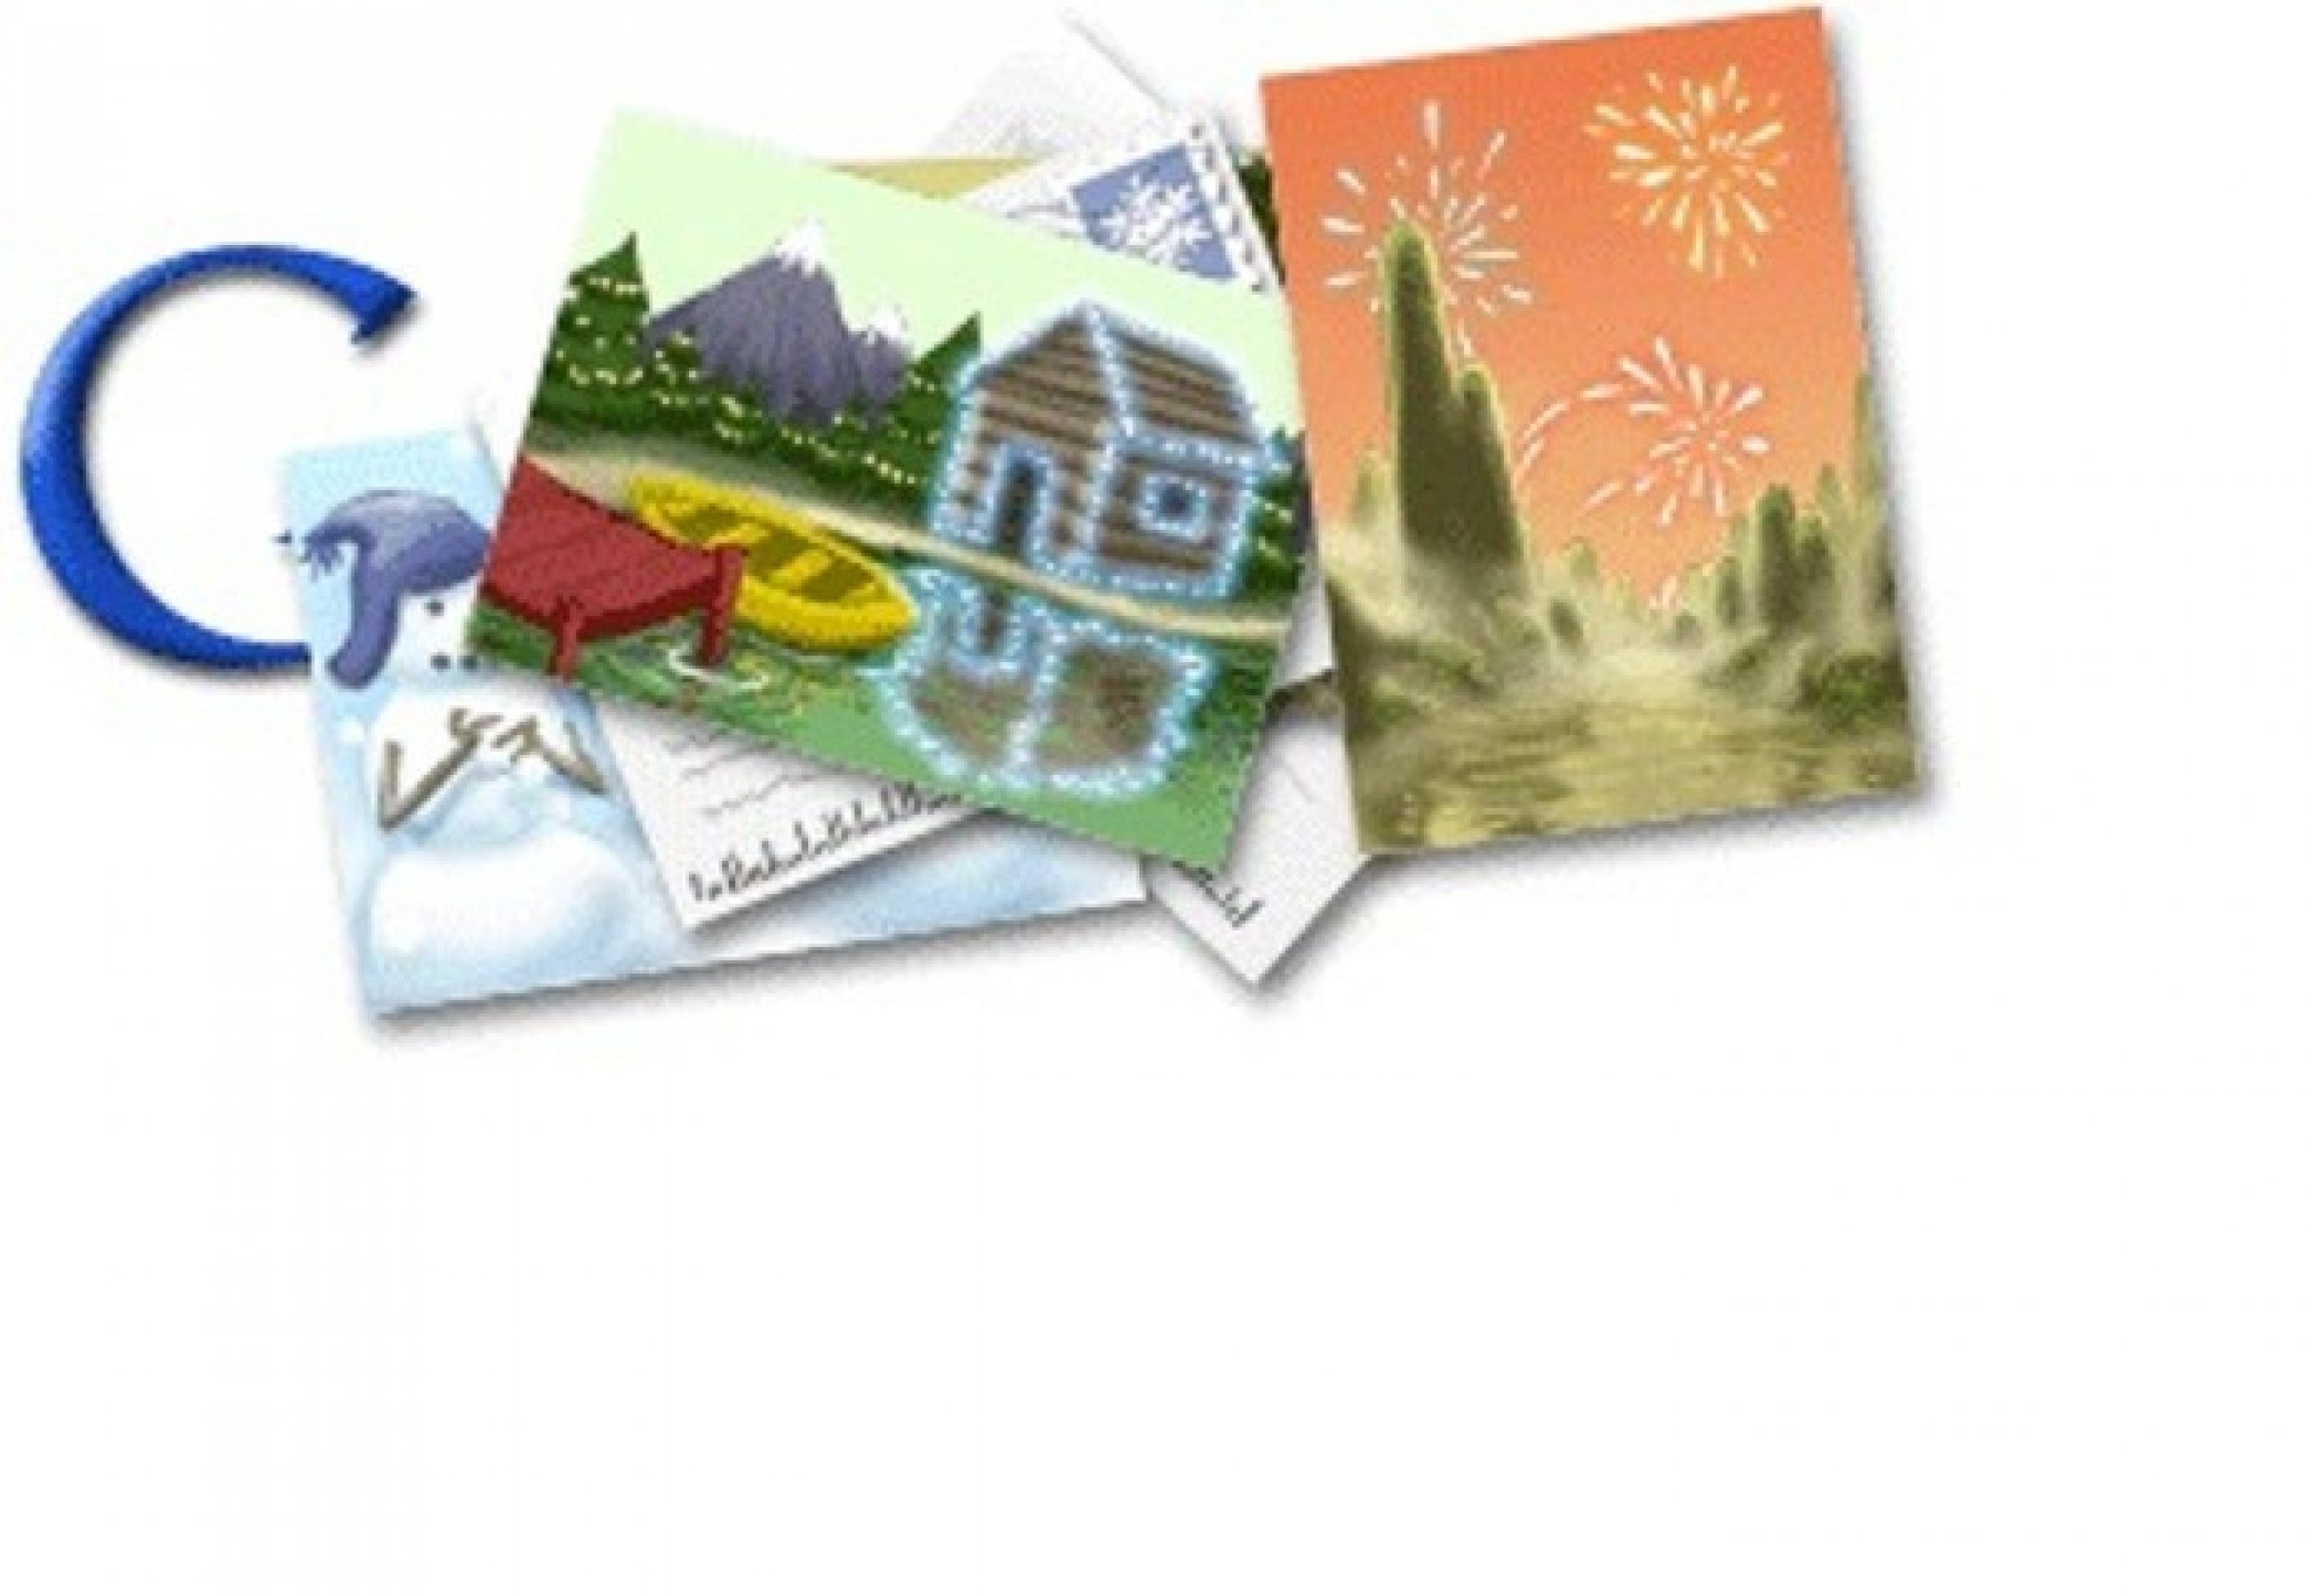 Google Doodle happy holidays 2009